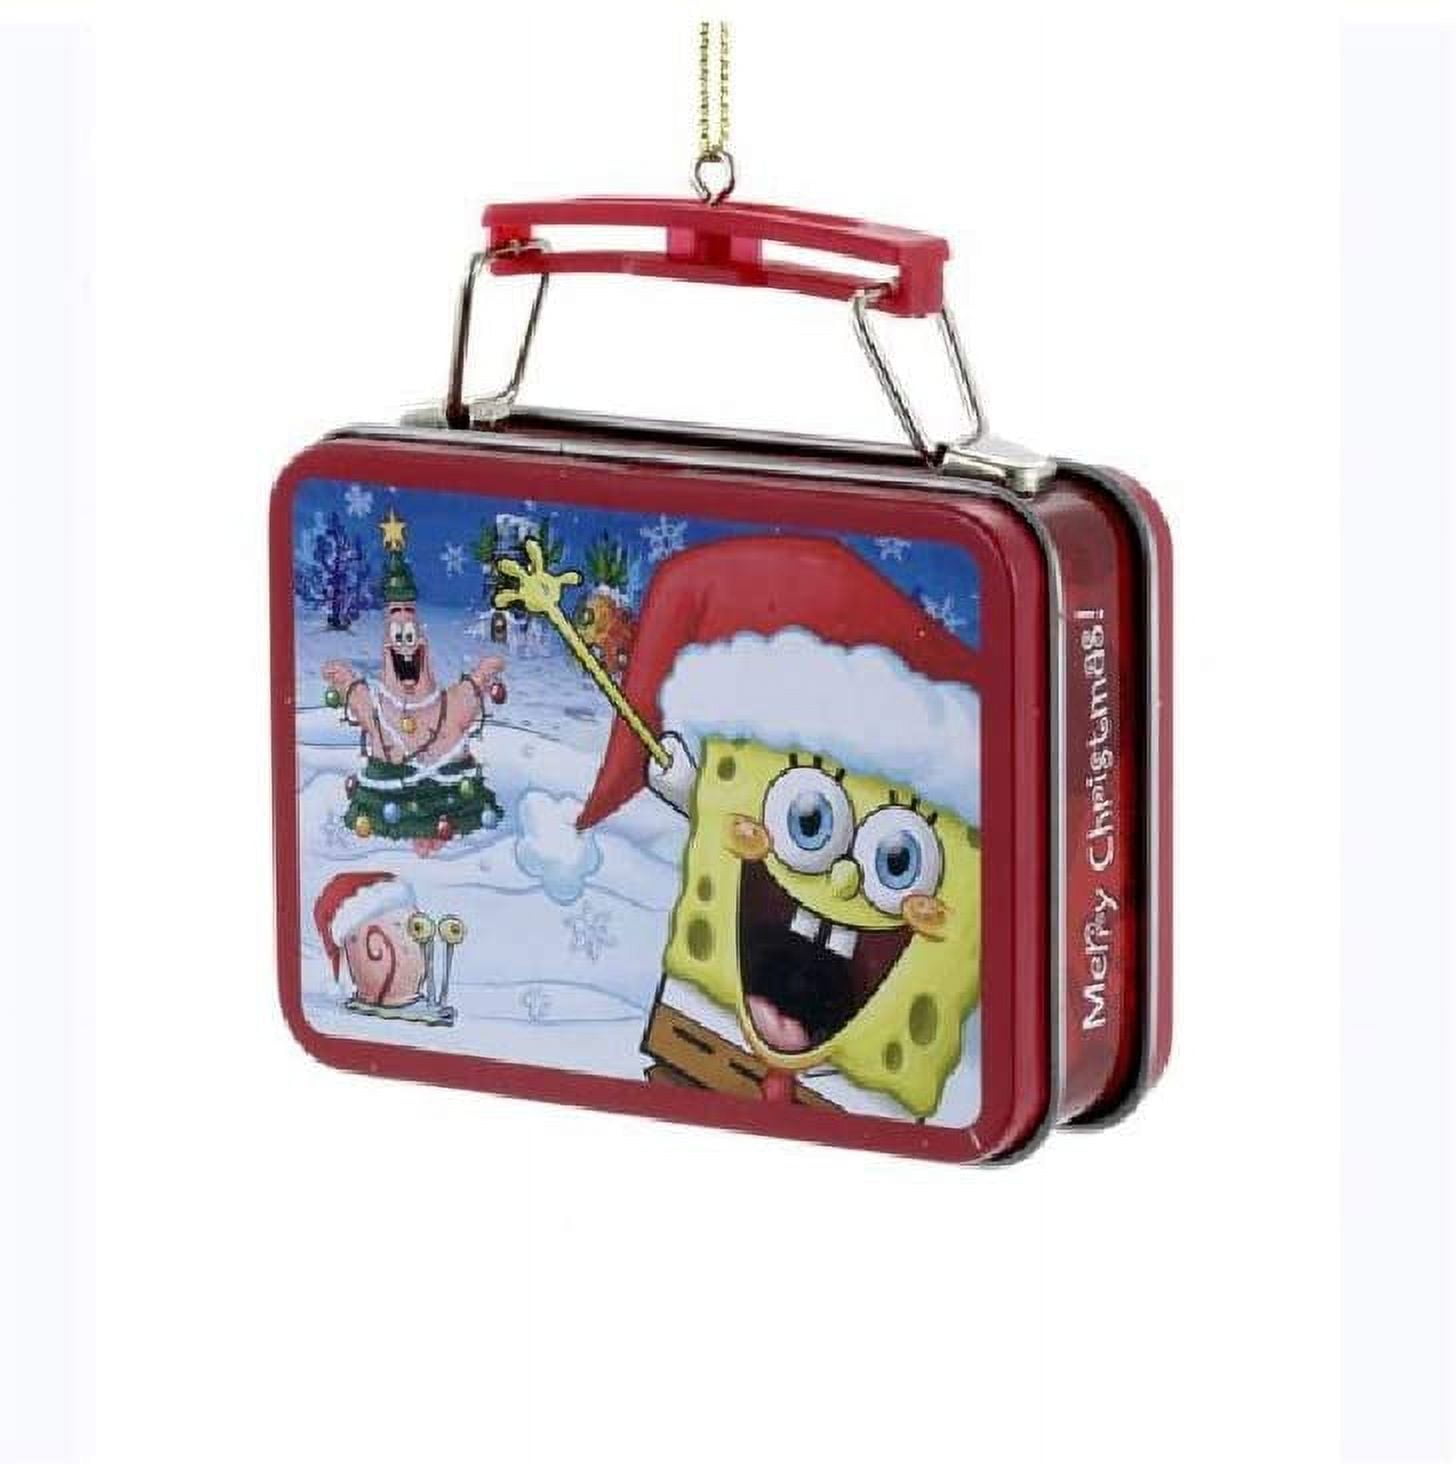 Spongebob Squarepants Collectible Metal Lunchbox. 